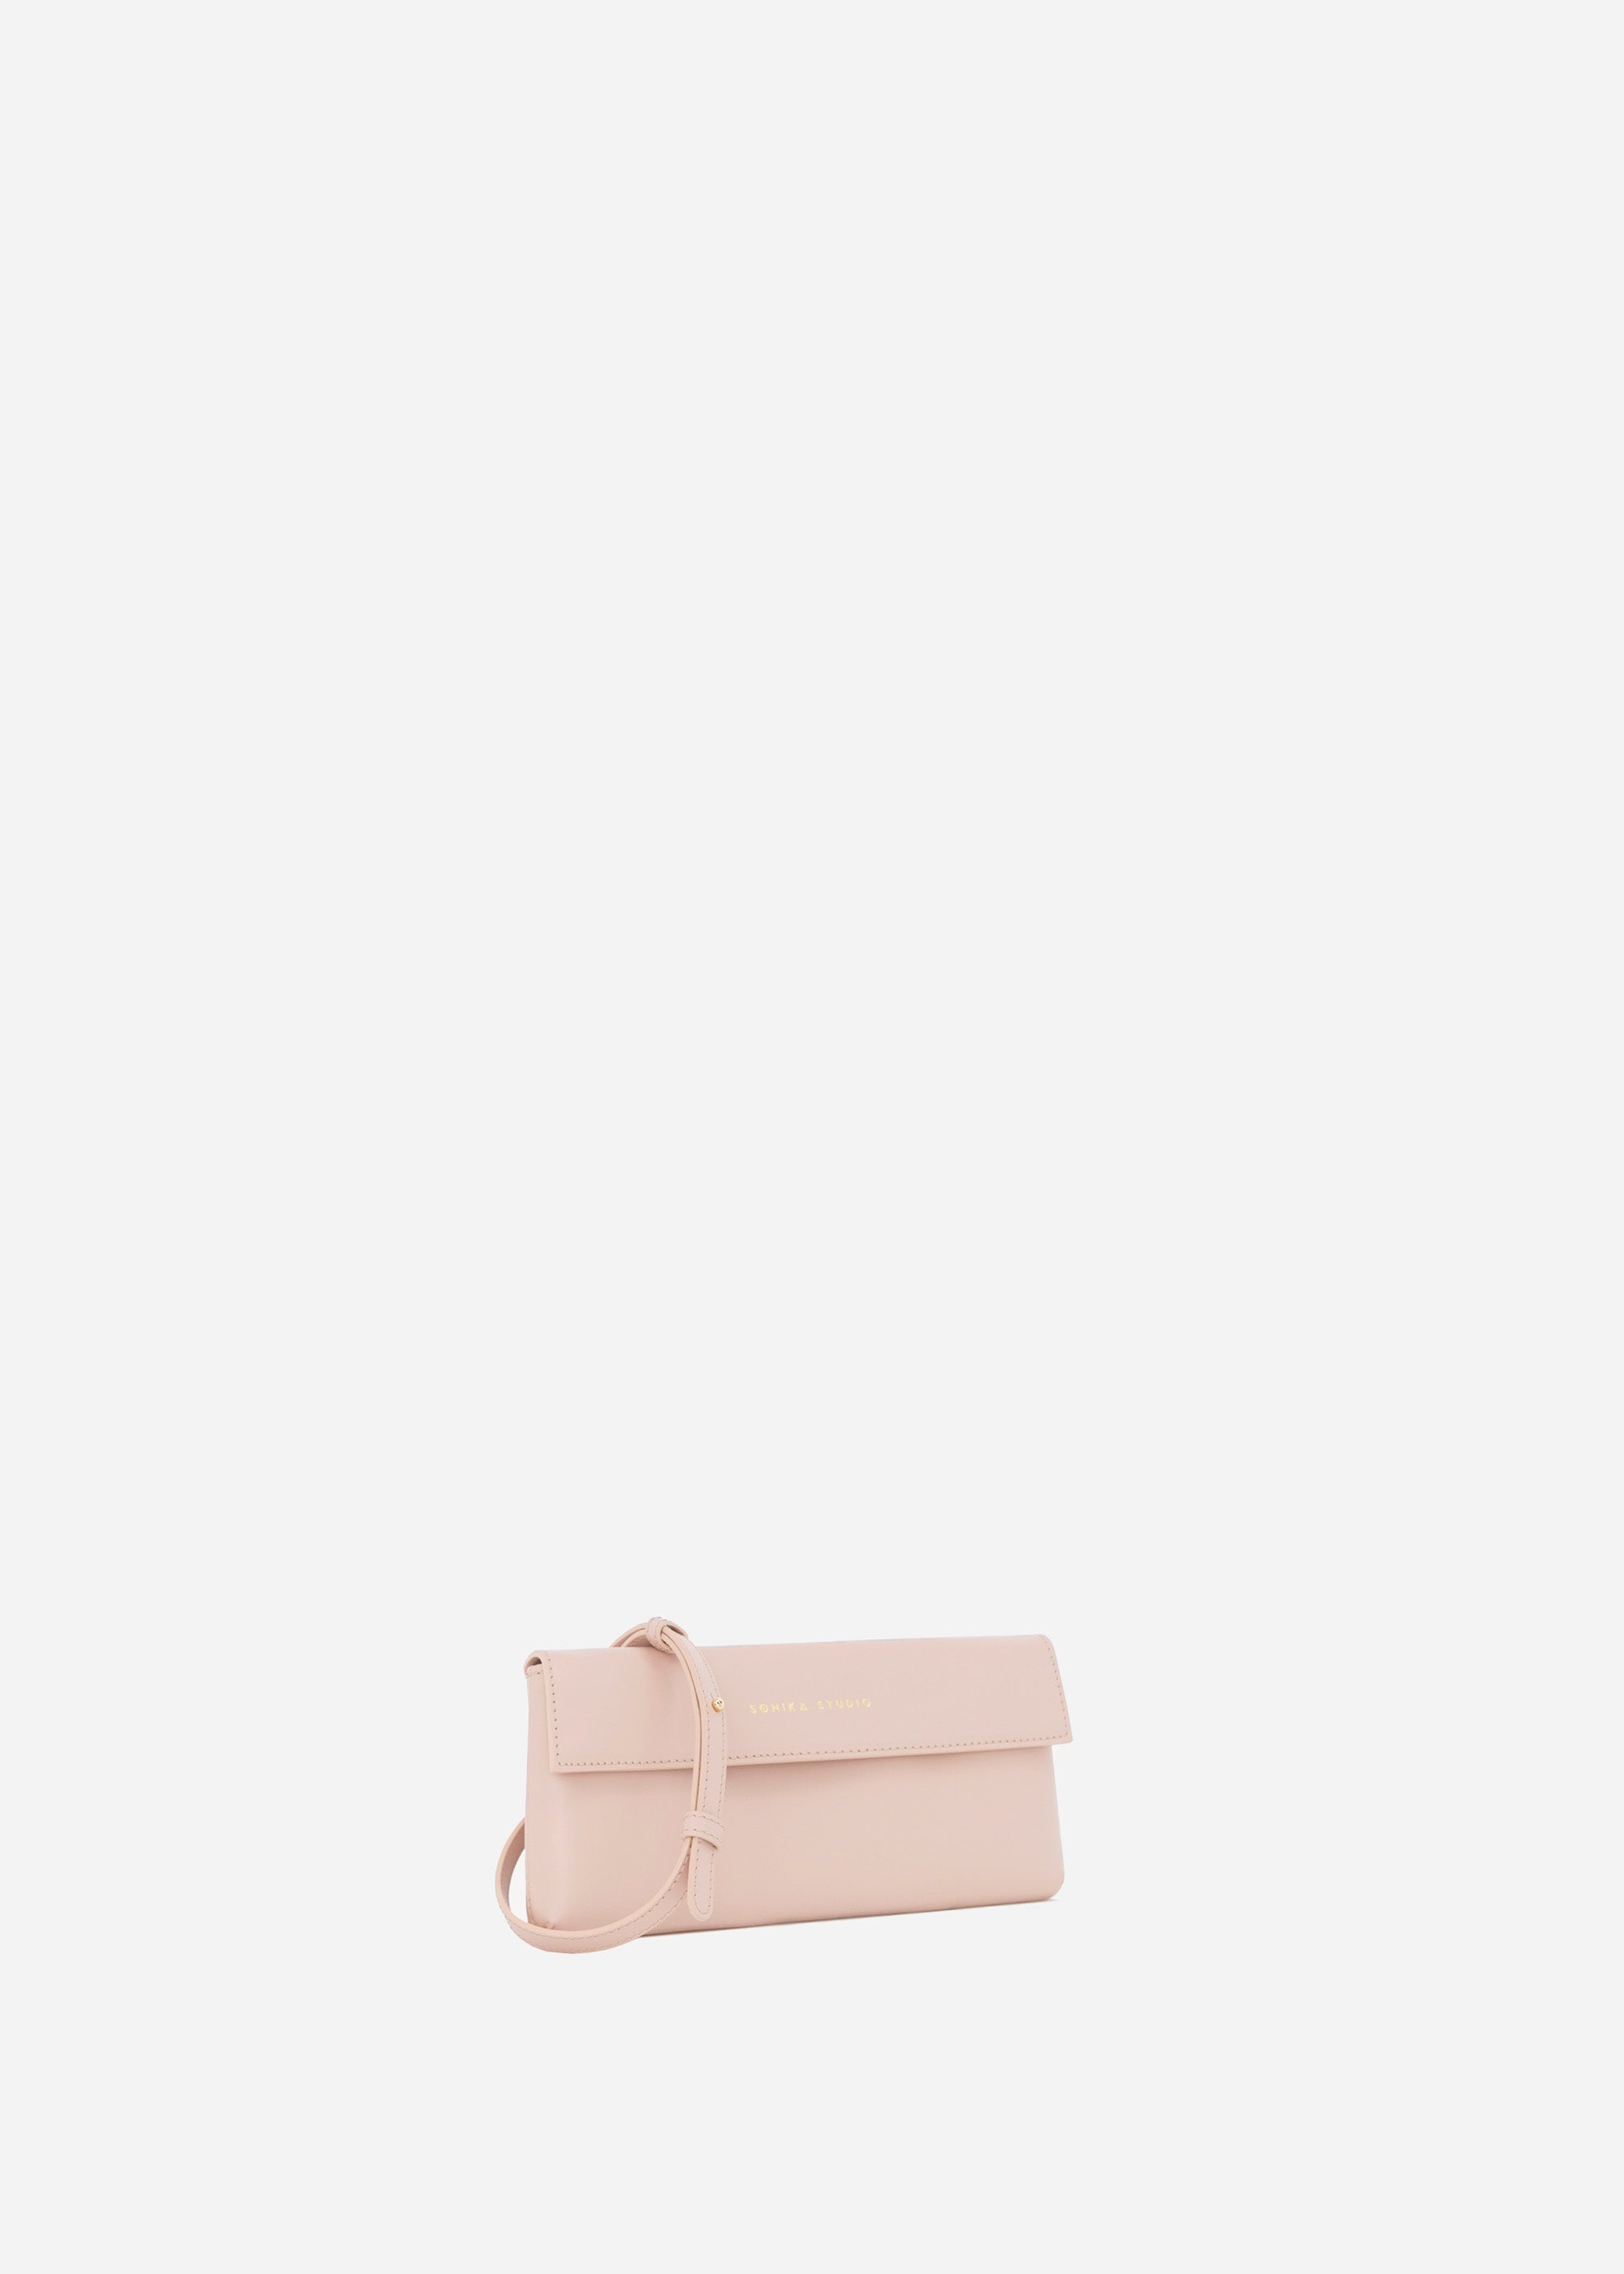 Mini bag Sokhaya - Nude leather